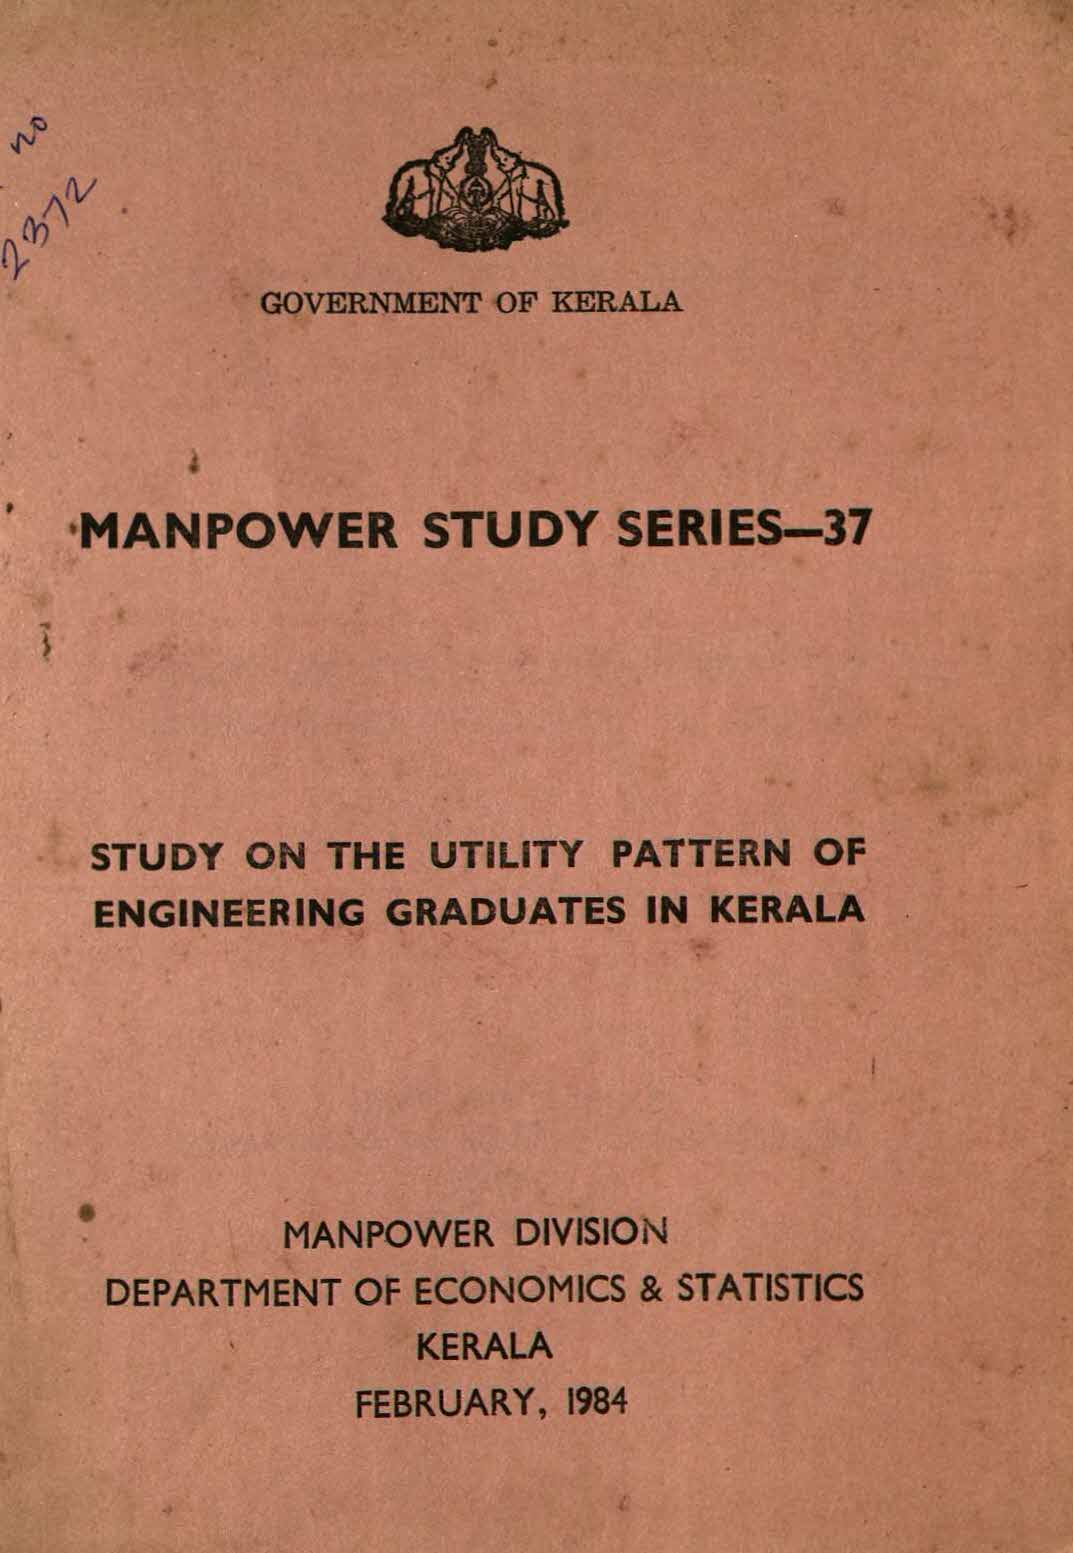 MANPOWER STUDY SERIES (37)-1984